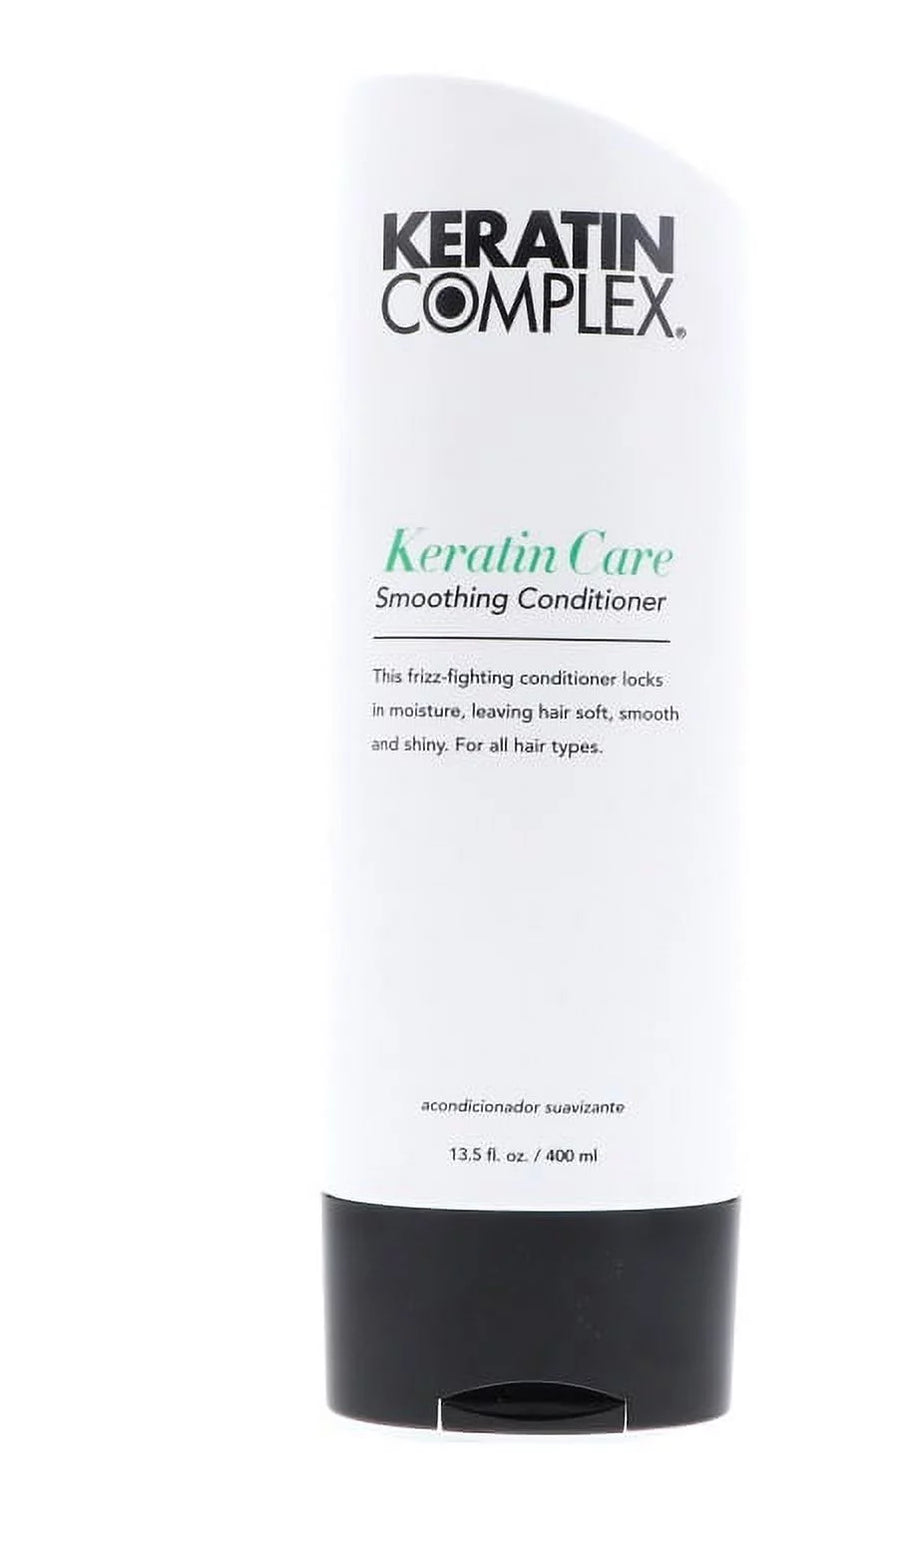 Keratin Complex Keratin Care Smoothing Conditioner image of 13.5 oz bottle